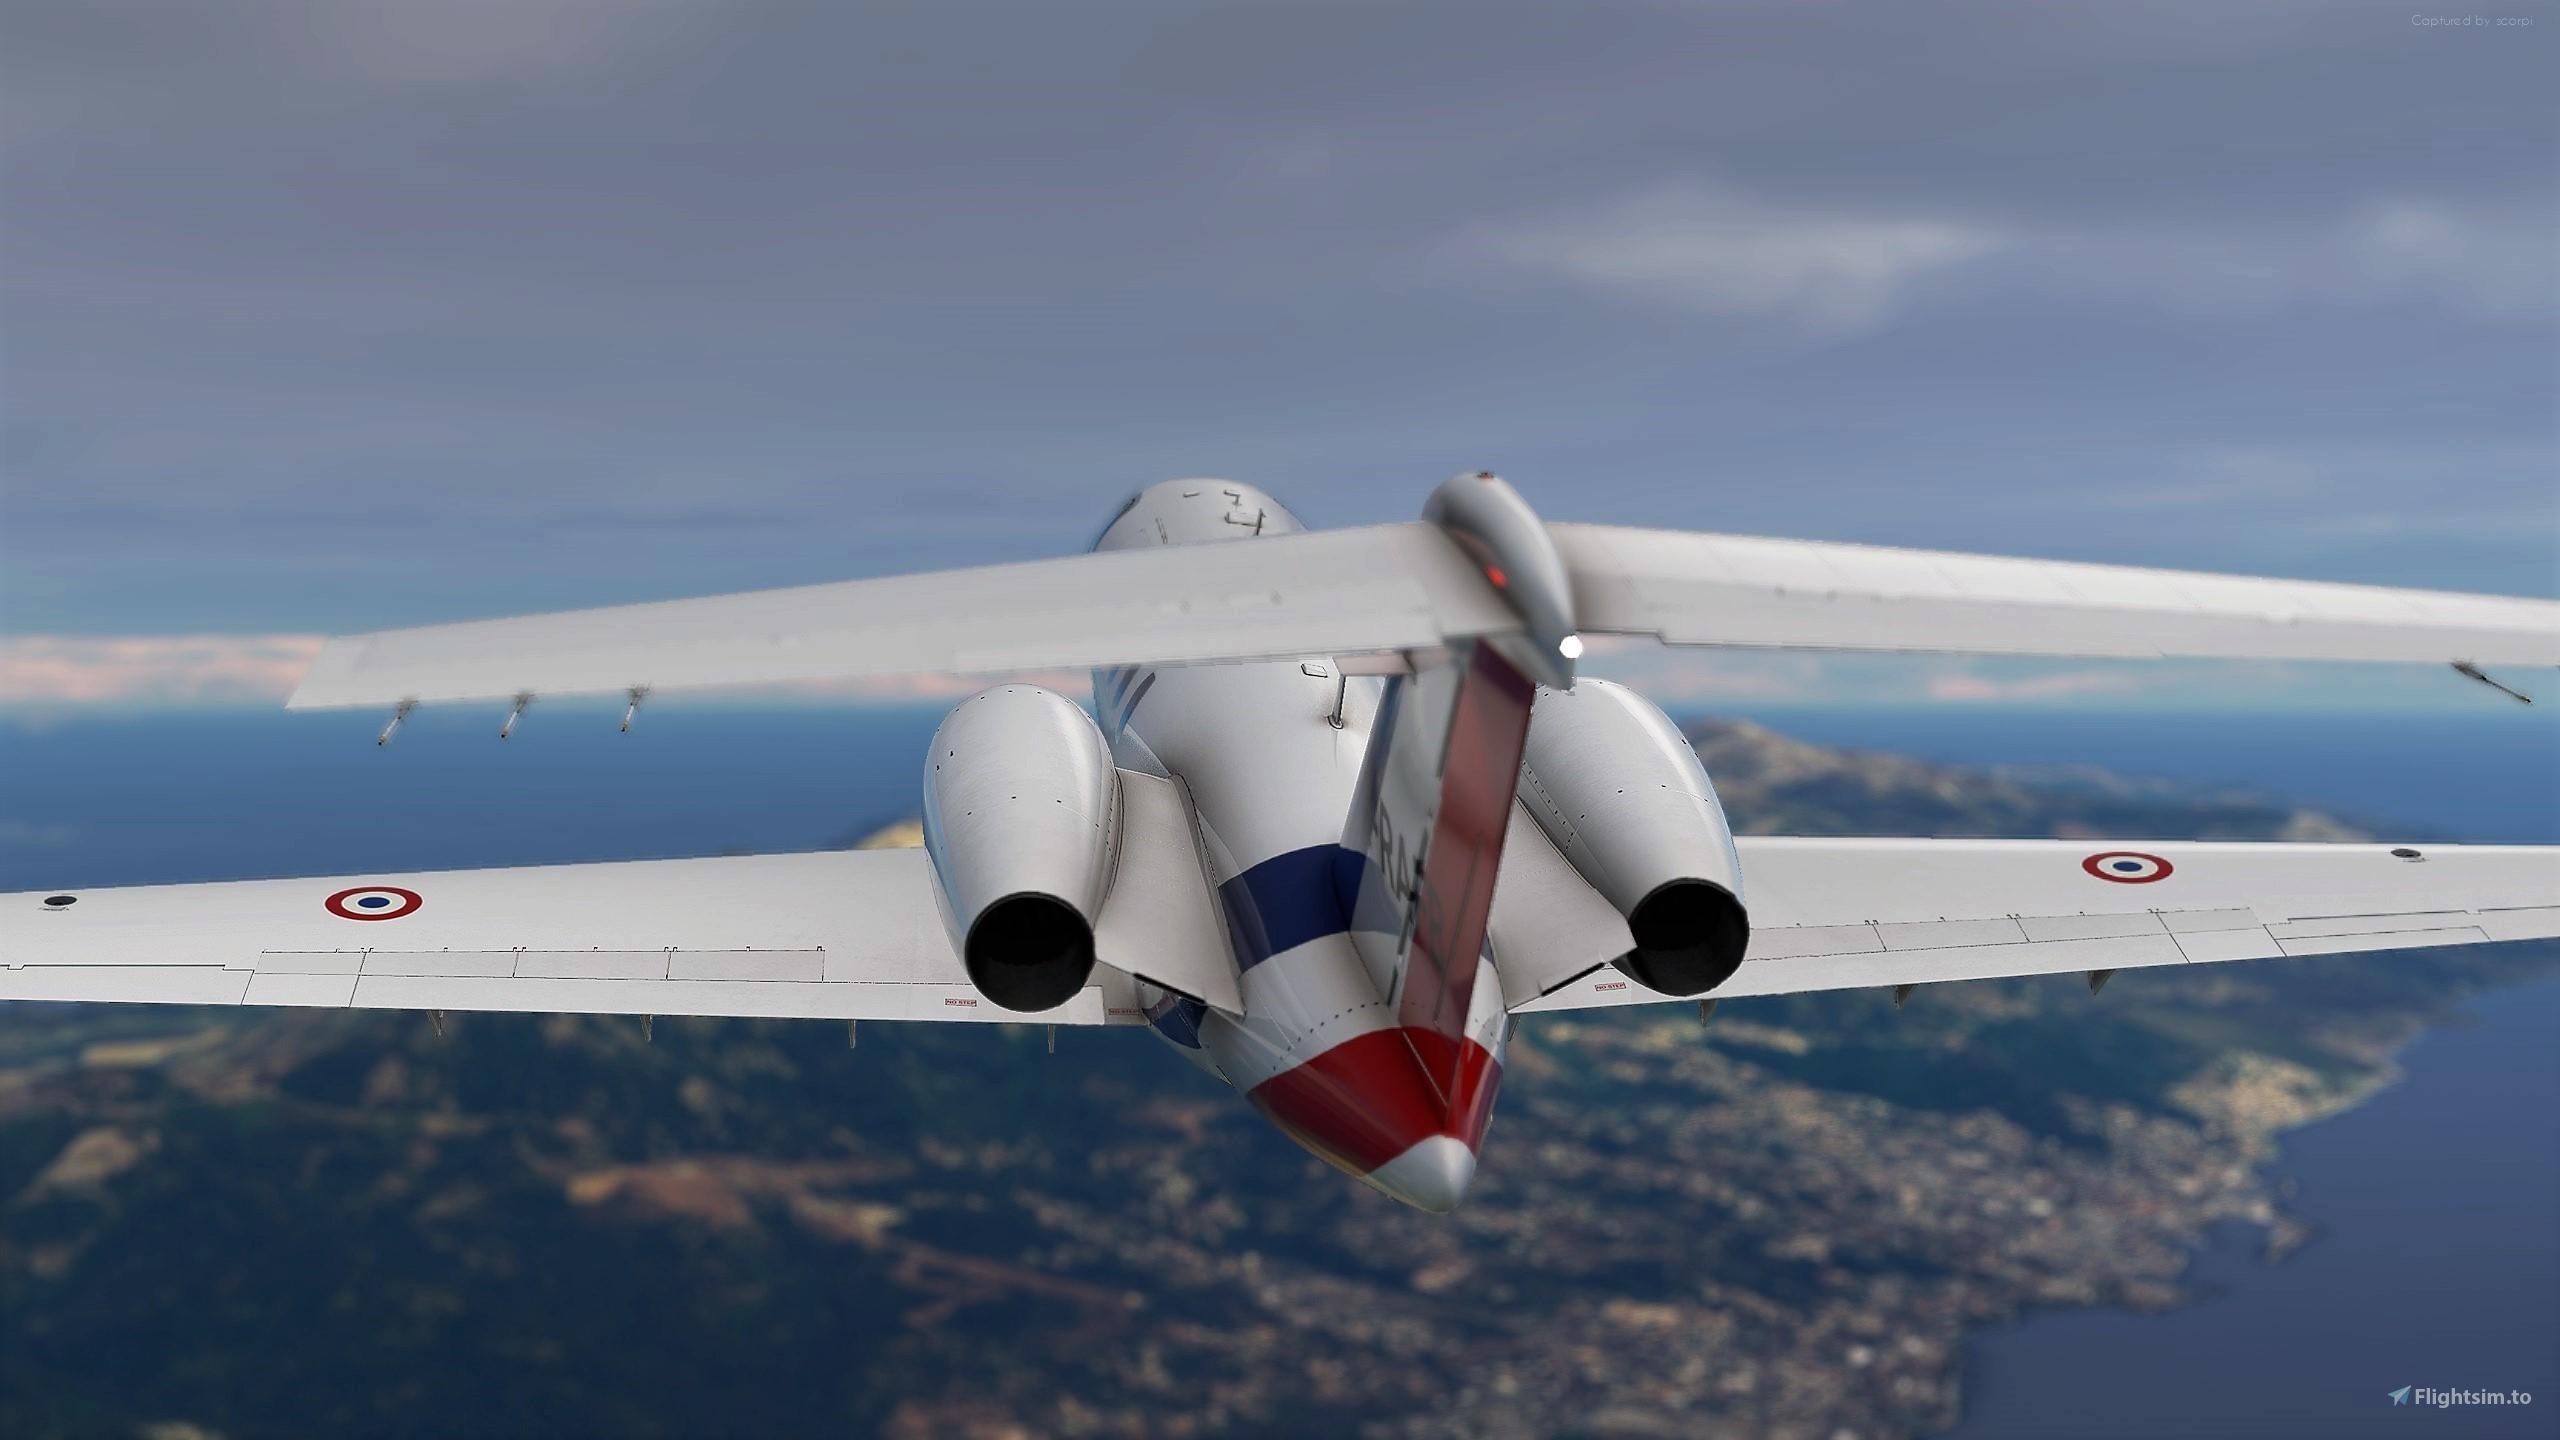 microsoft flight simulator wallpaper